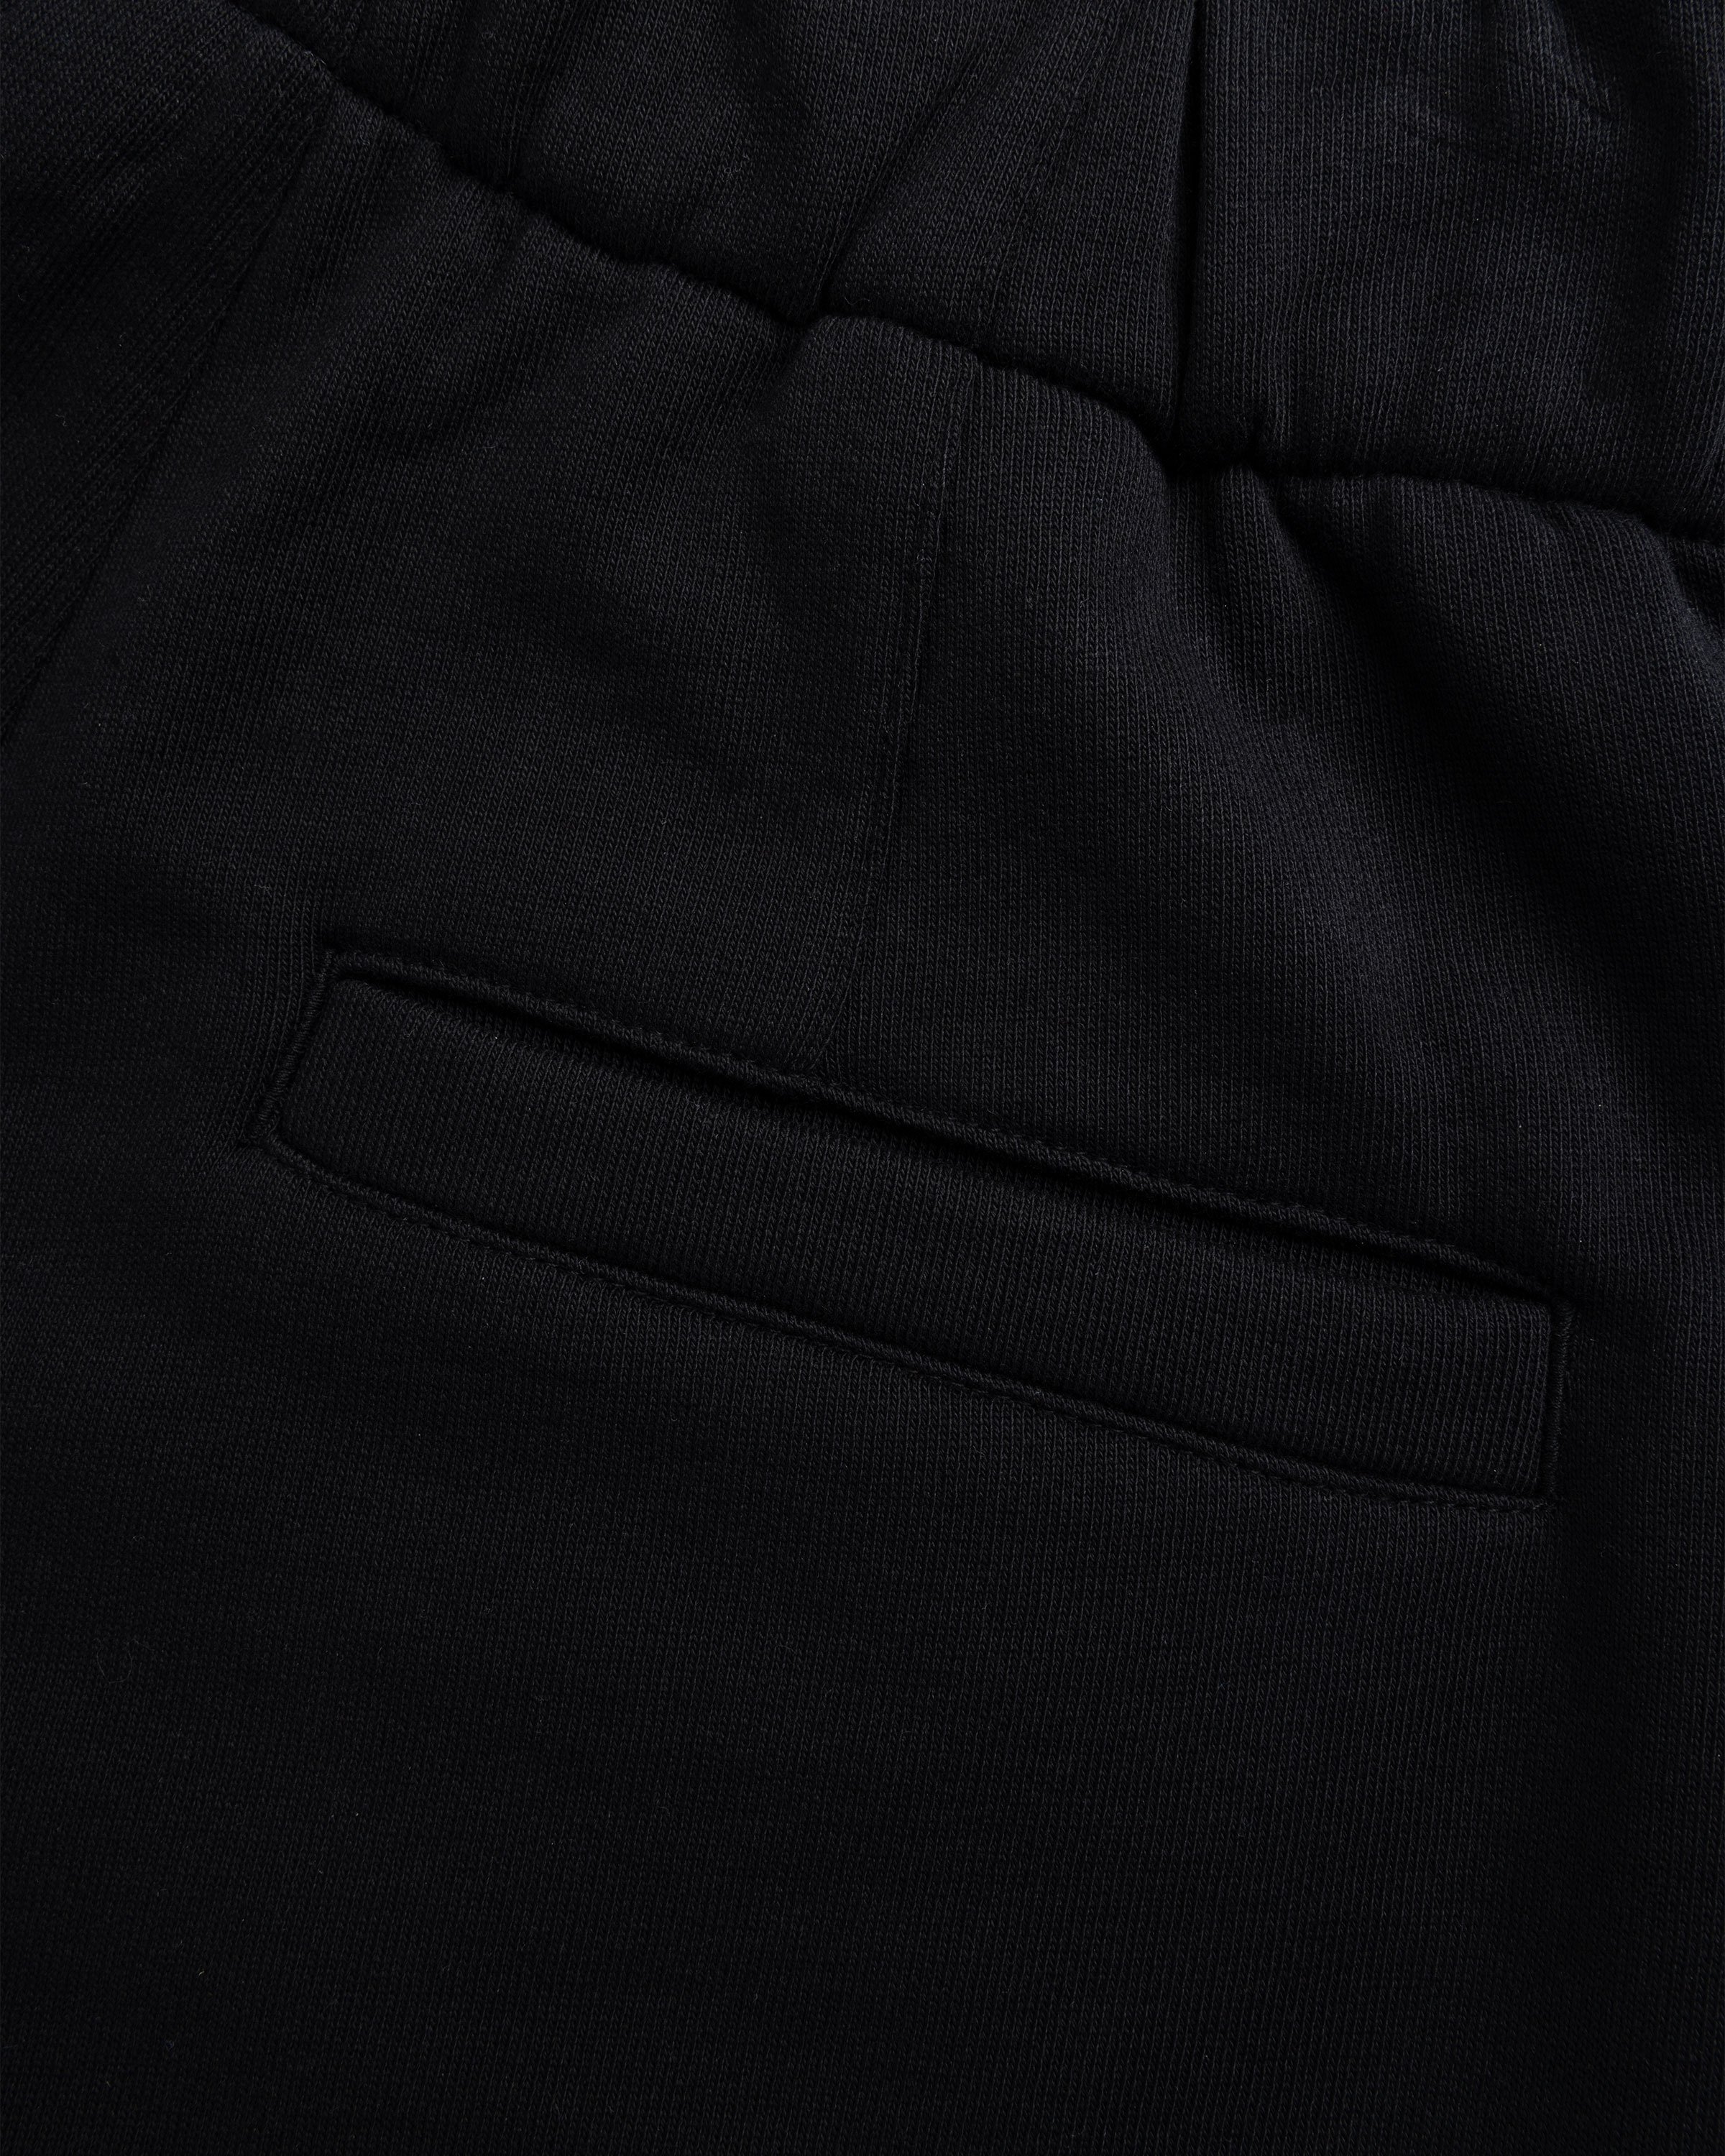 Dries van Noten - HAMA 8610 M.K.PANTS BLACK - Clothing - Black - Image 7